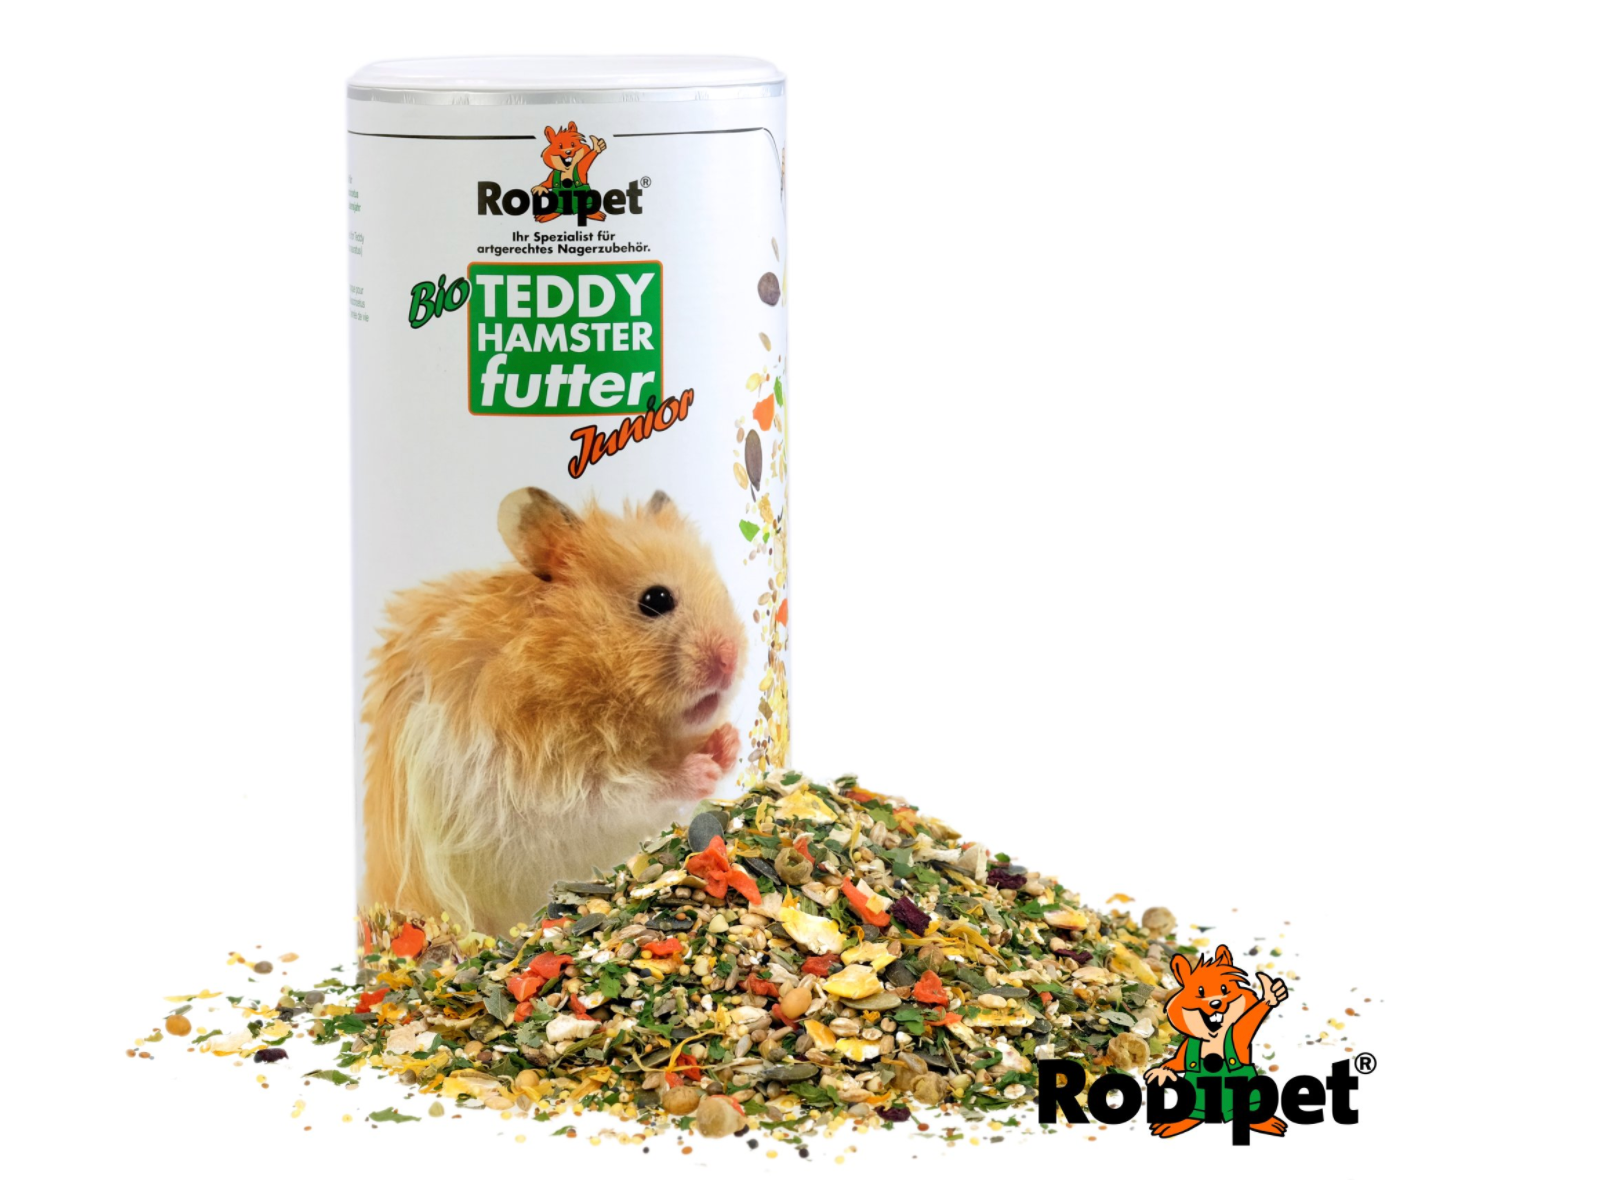 RODIPET Organic Teddy Hamster Food "JUNIOR" 500g